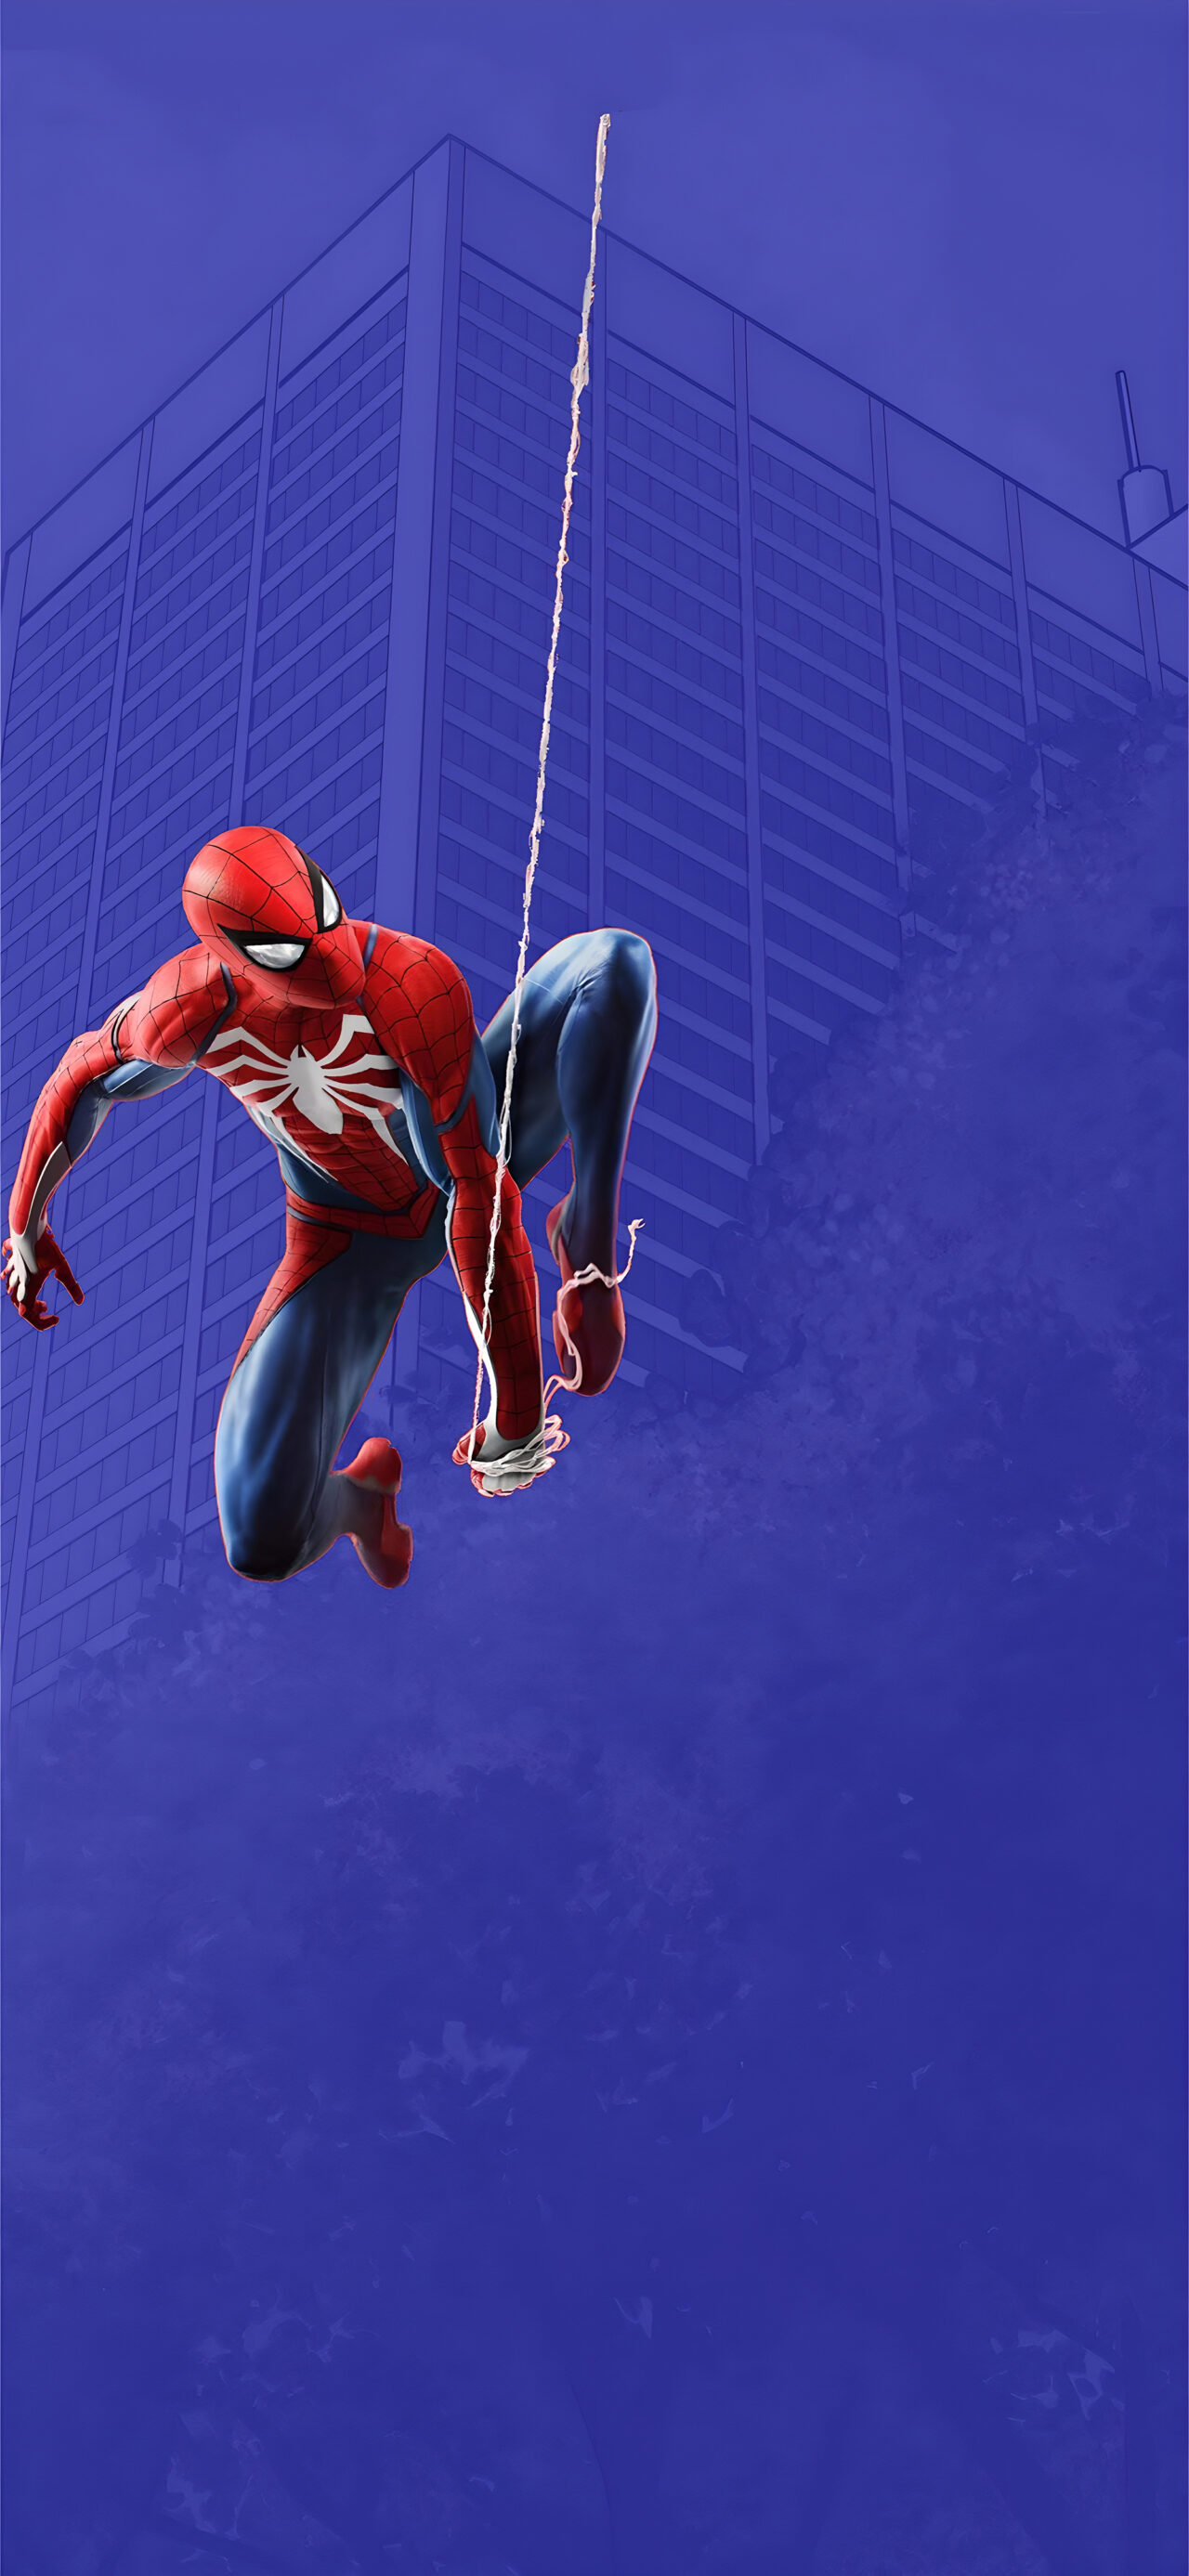 Spiderman - iPhone Wallpaper [1727x3737] : r/iphonewallpapers